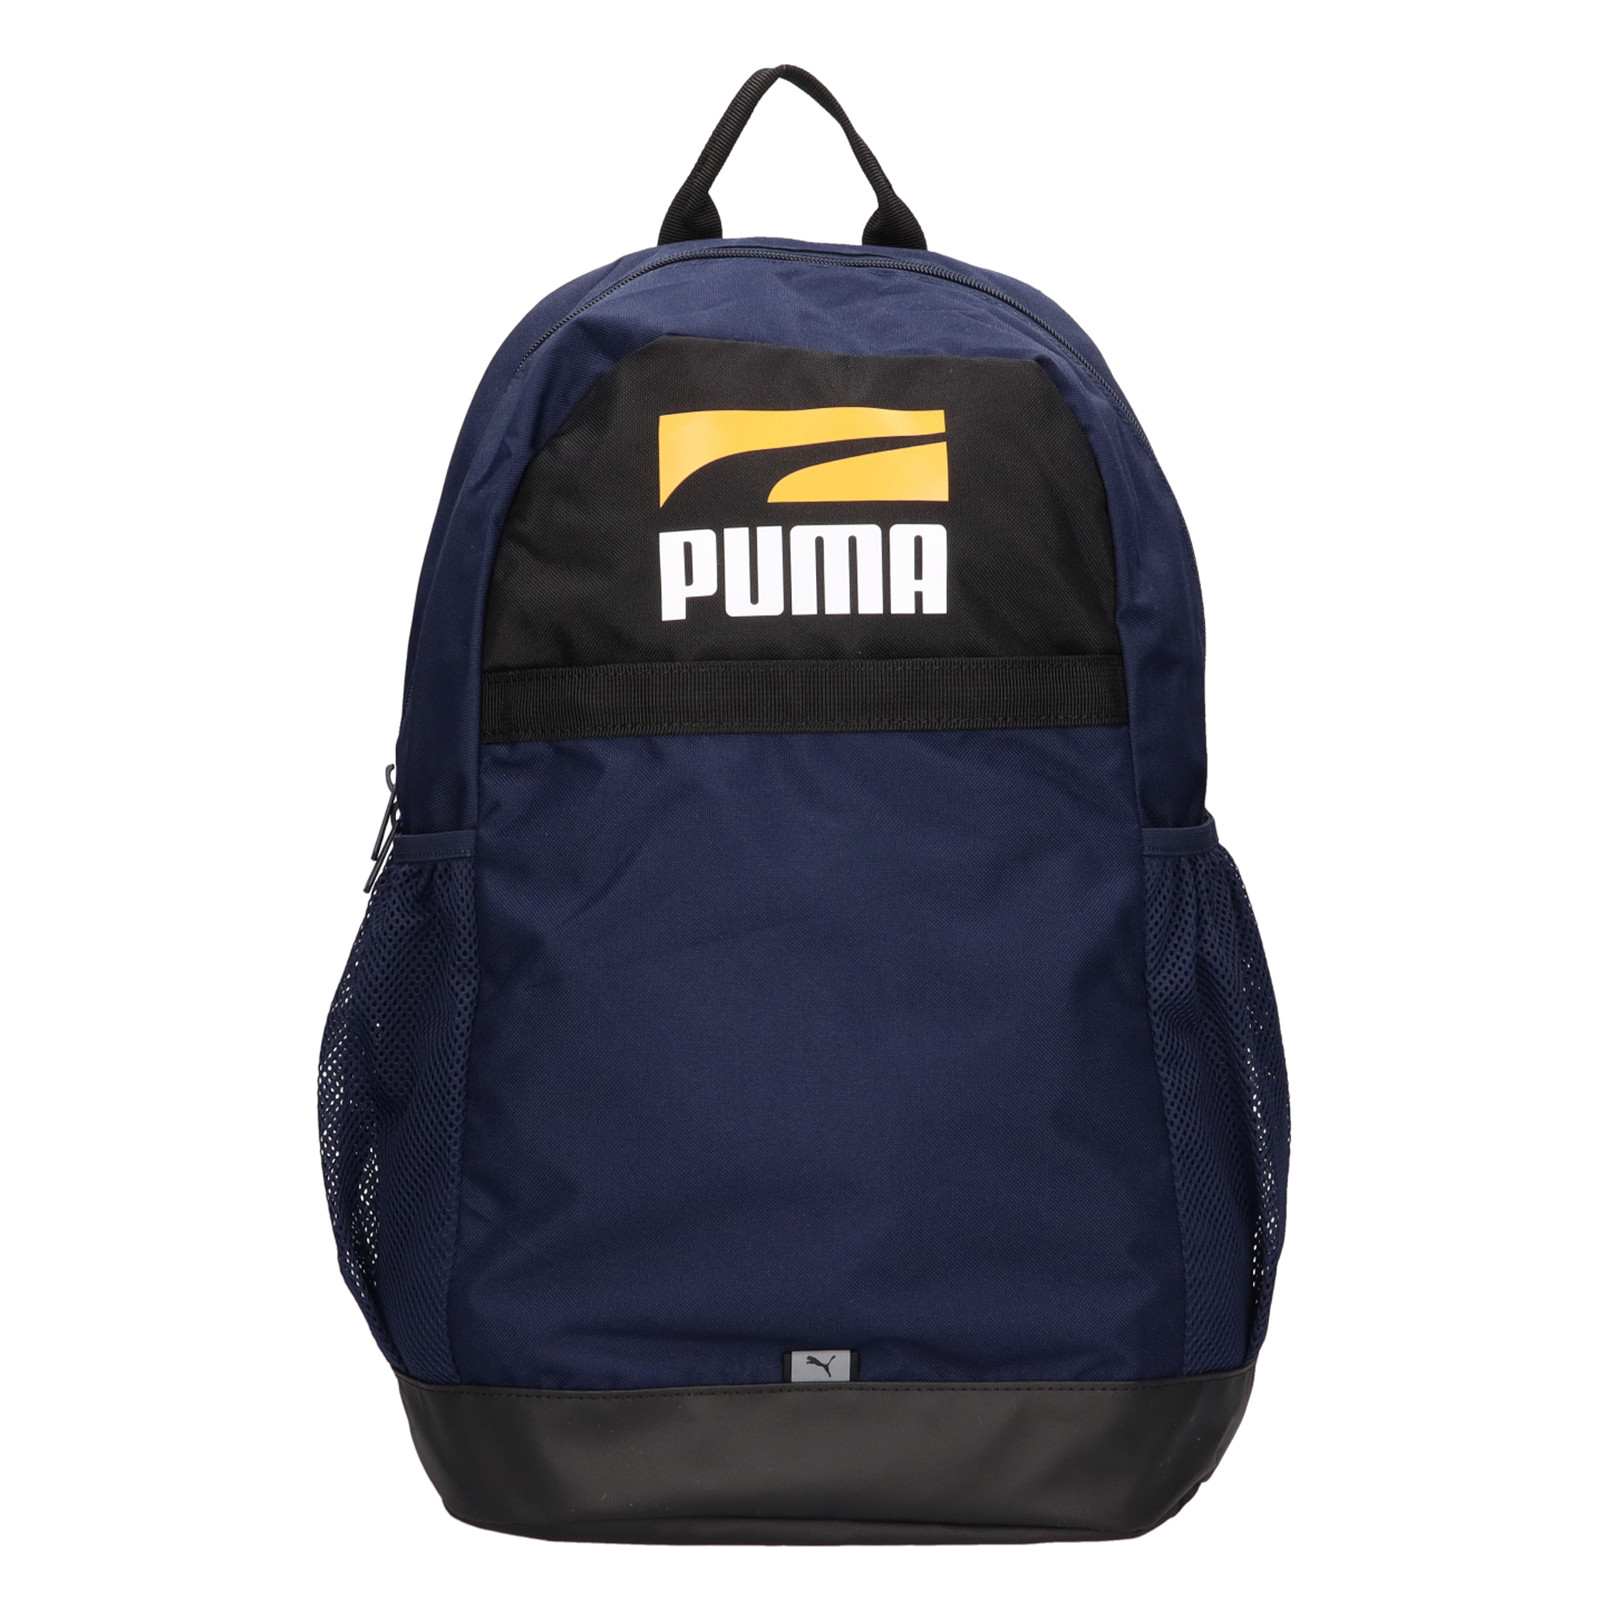 Sportovní batoh Puma Damia - modrá